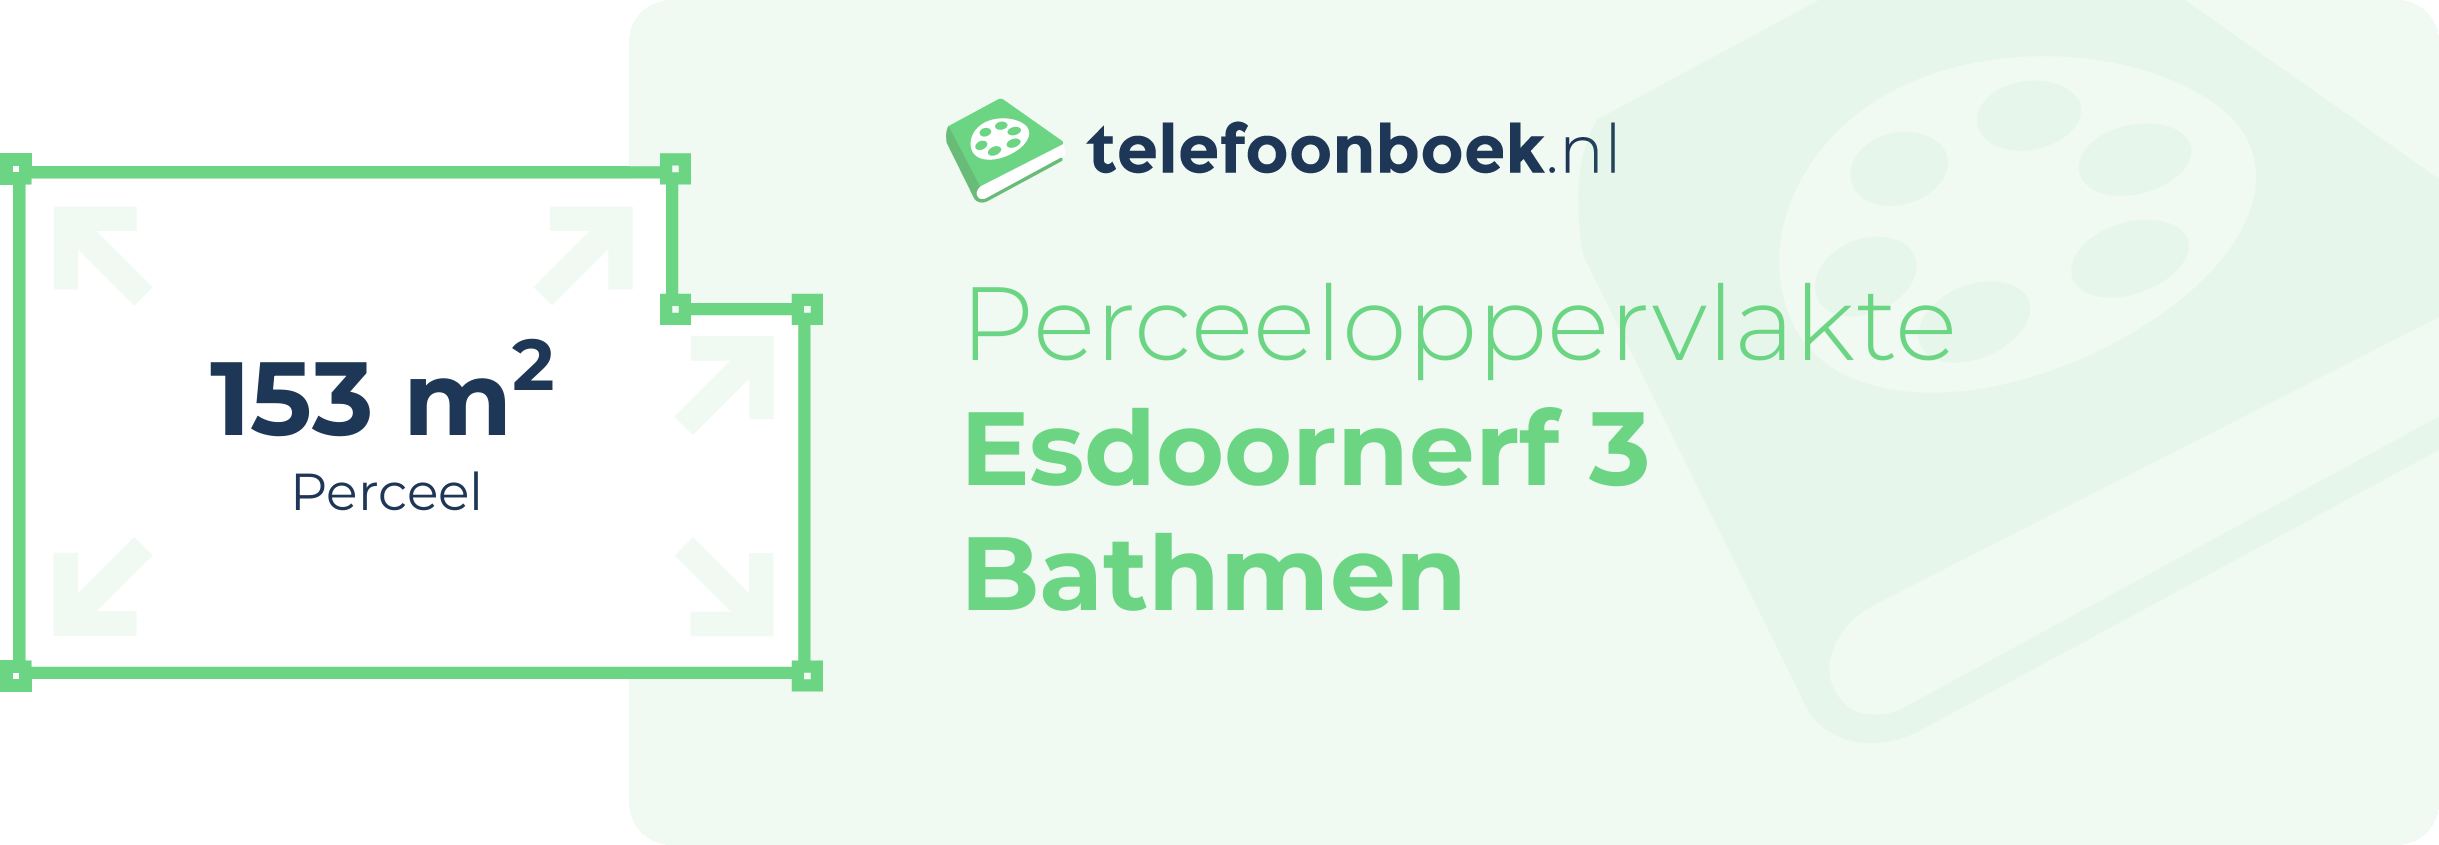 Perceeloppervlakte Esdoornerf 3 Bathmen